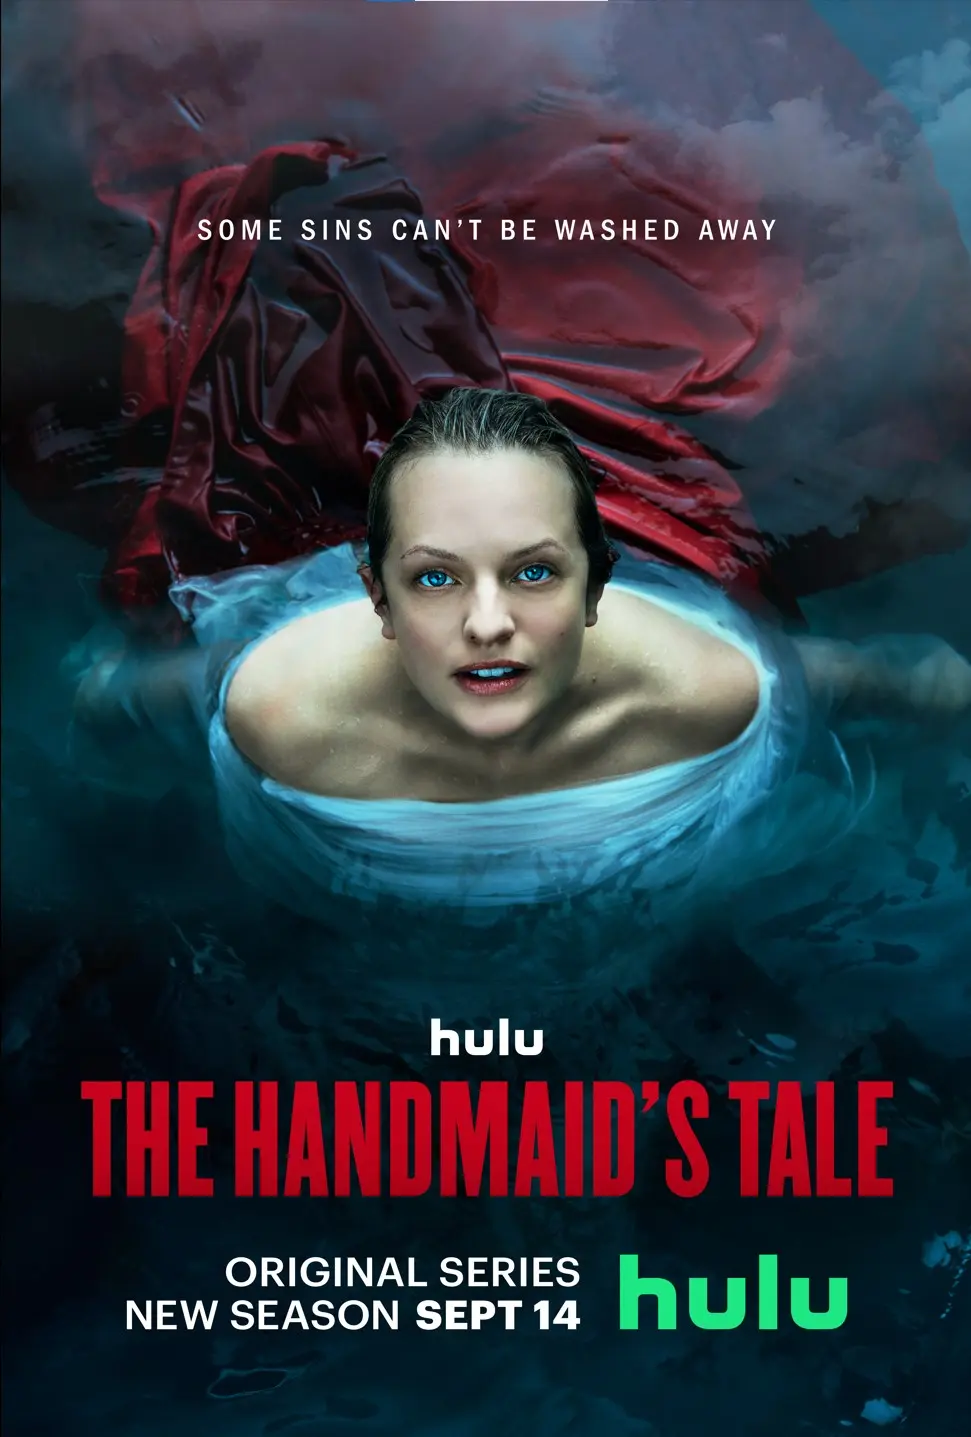 The Handmaid's Tale (Eden)
